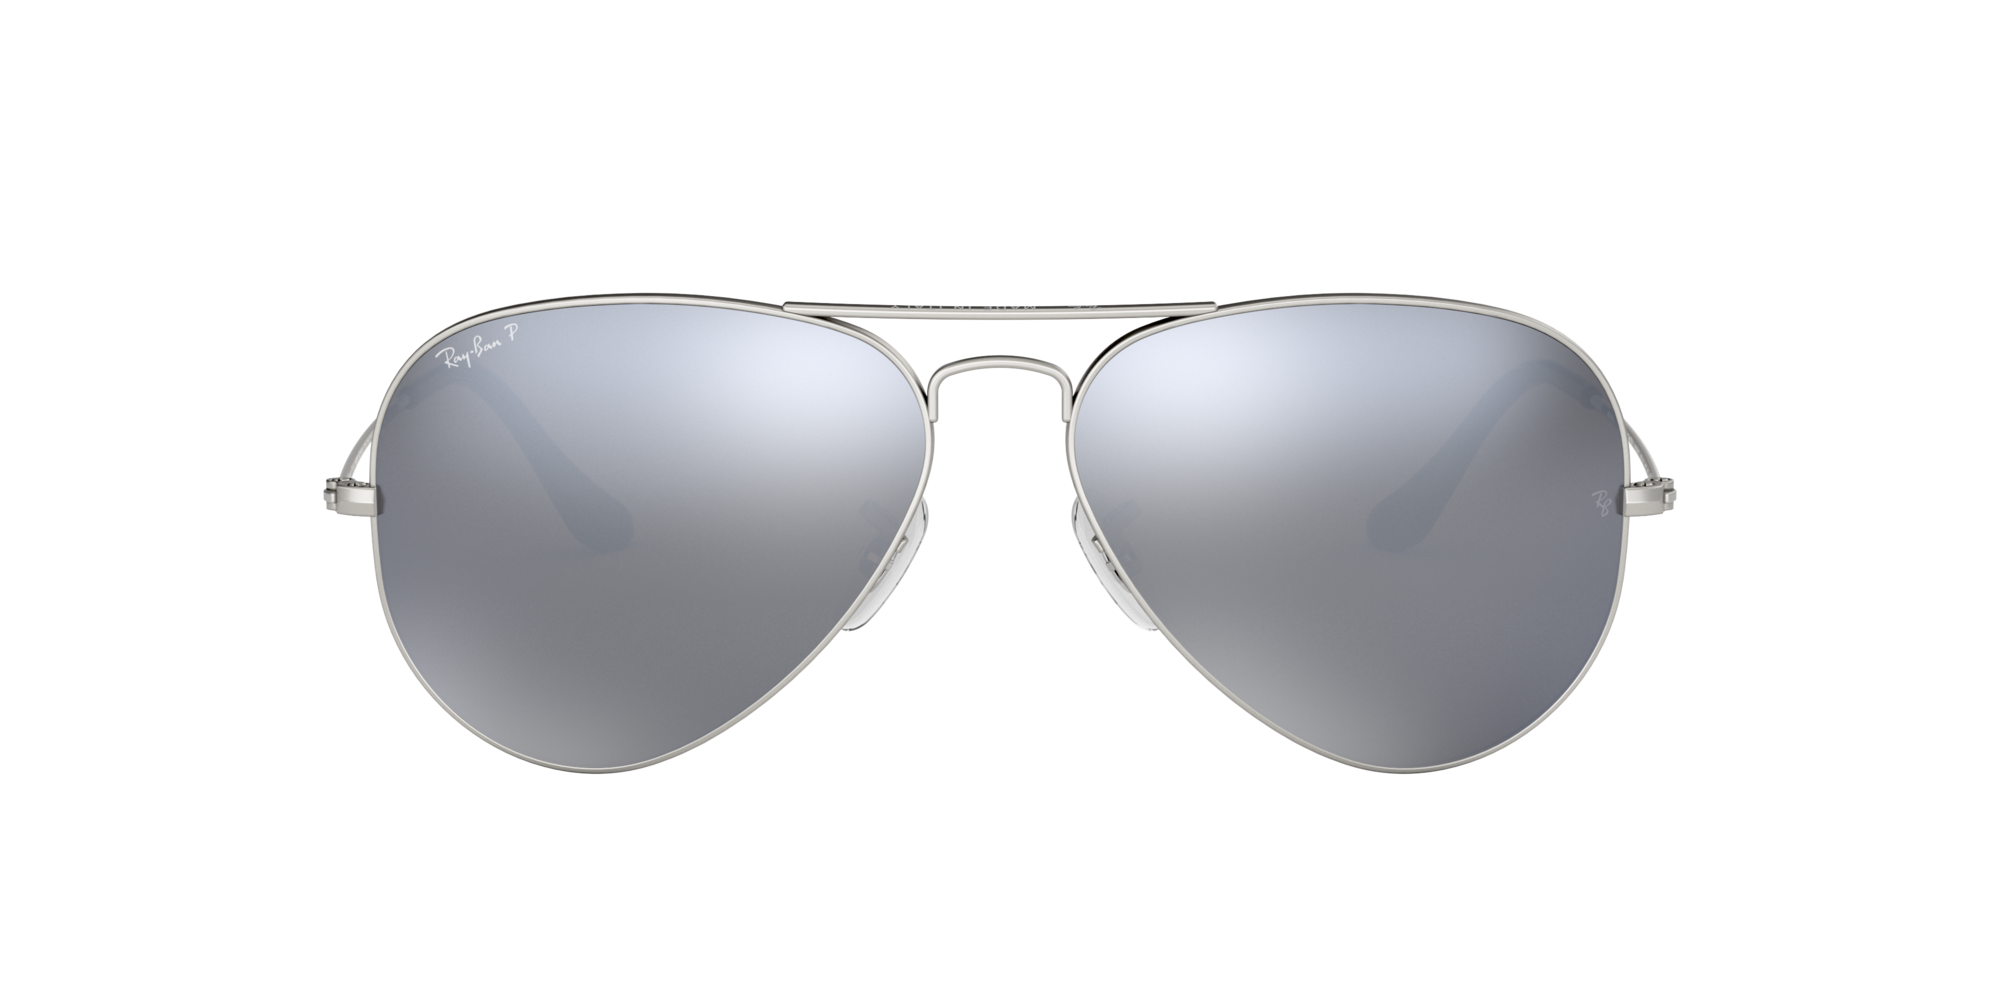 Retro Open Metal Colored Mirror Flat Lens Round Sunglasses 48mm #sunglass  #frame #sunglasses #summer #cateye … | Round sunglasses, Colored mirror,  Metal sunglasses